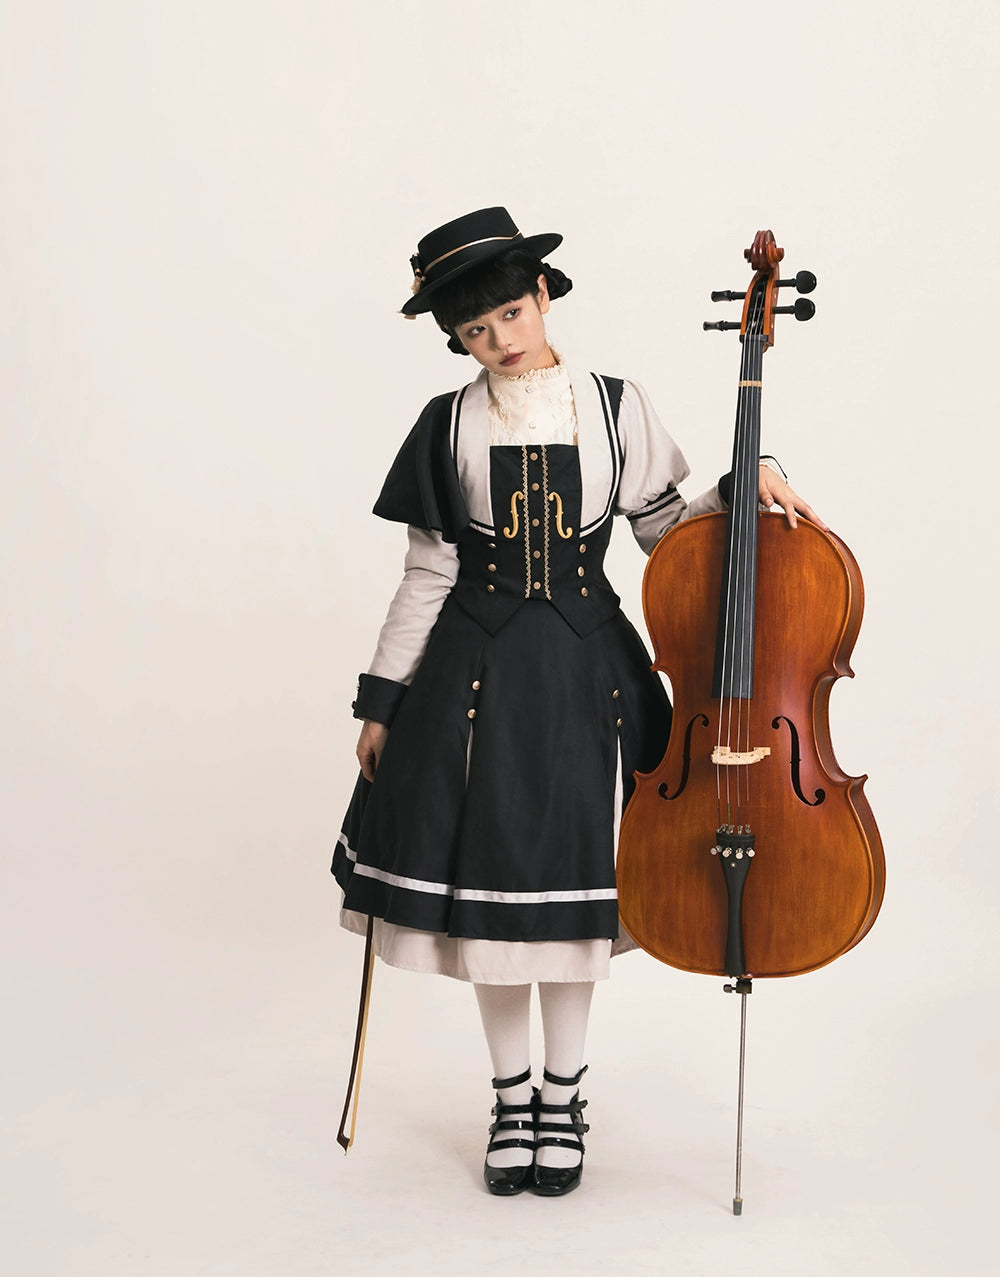 (BFM)Miss Point~ Elegant Lolita Coat~Golden Movement Customized Short Coat   